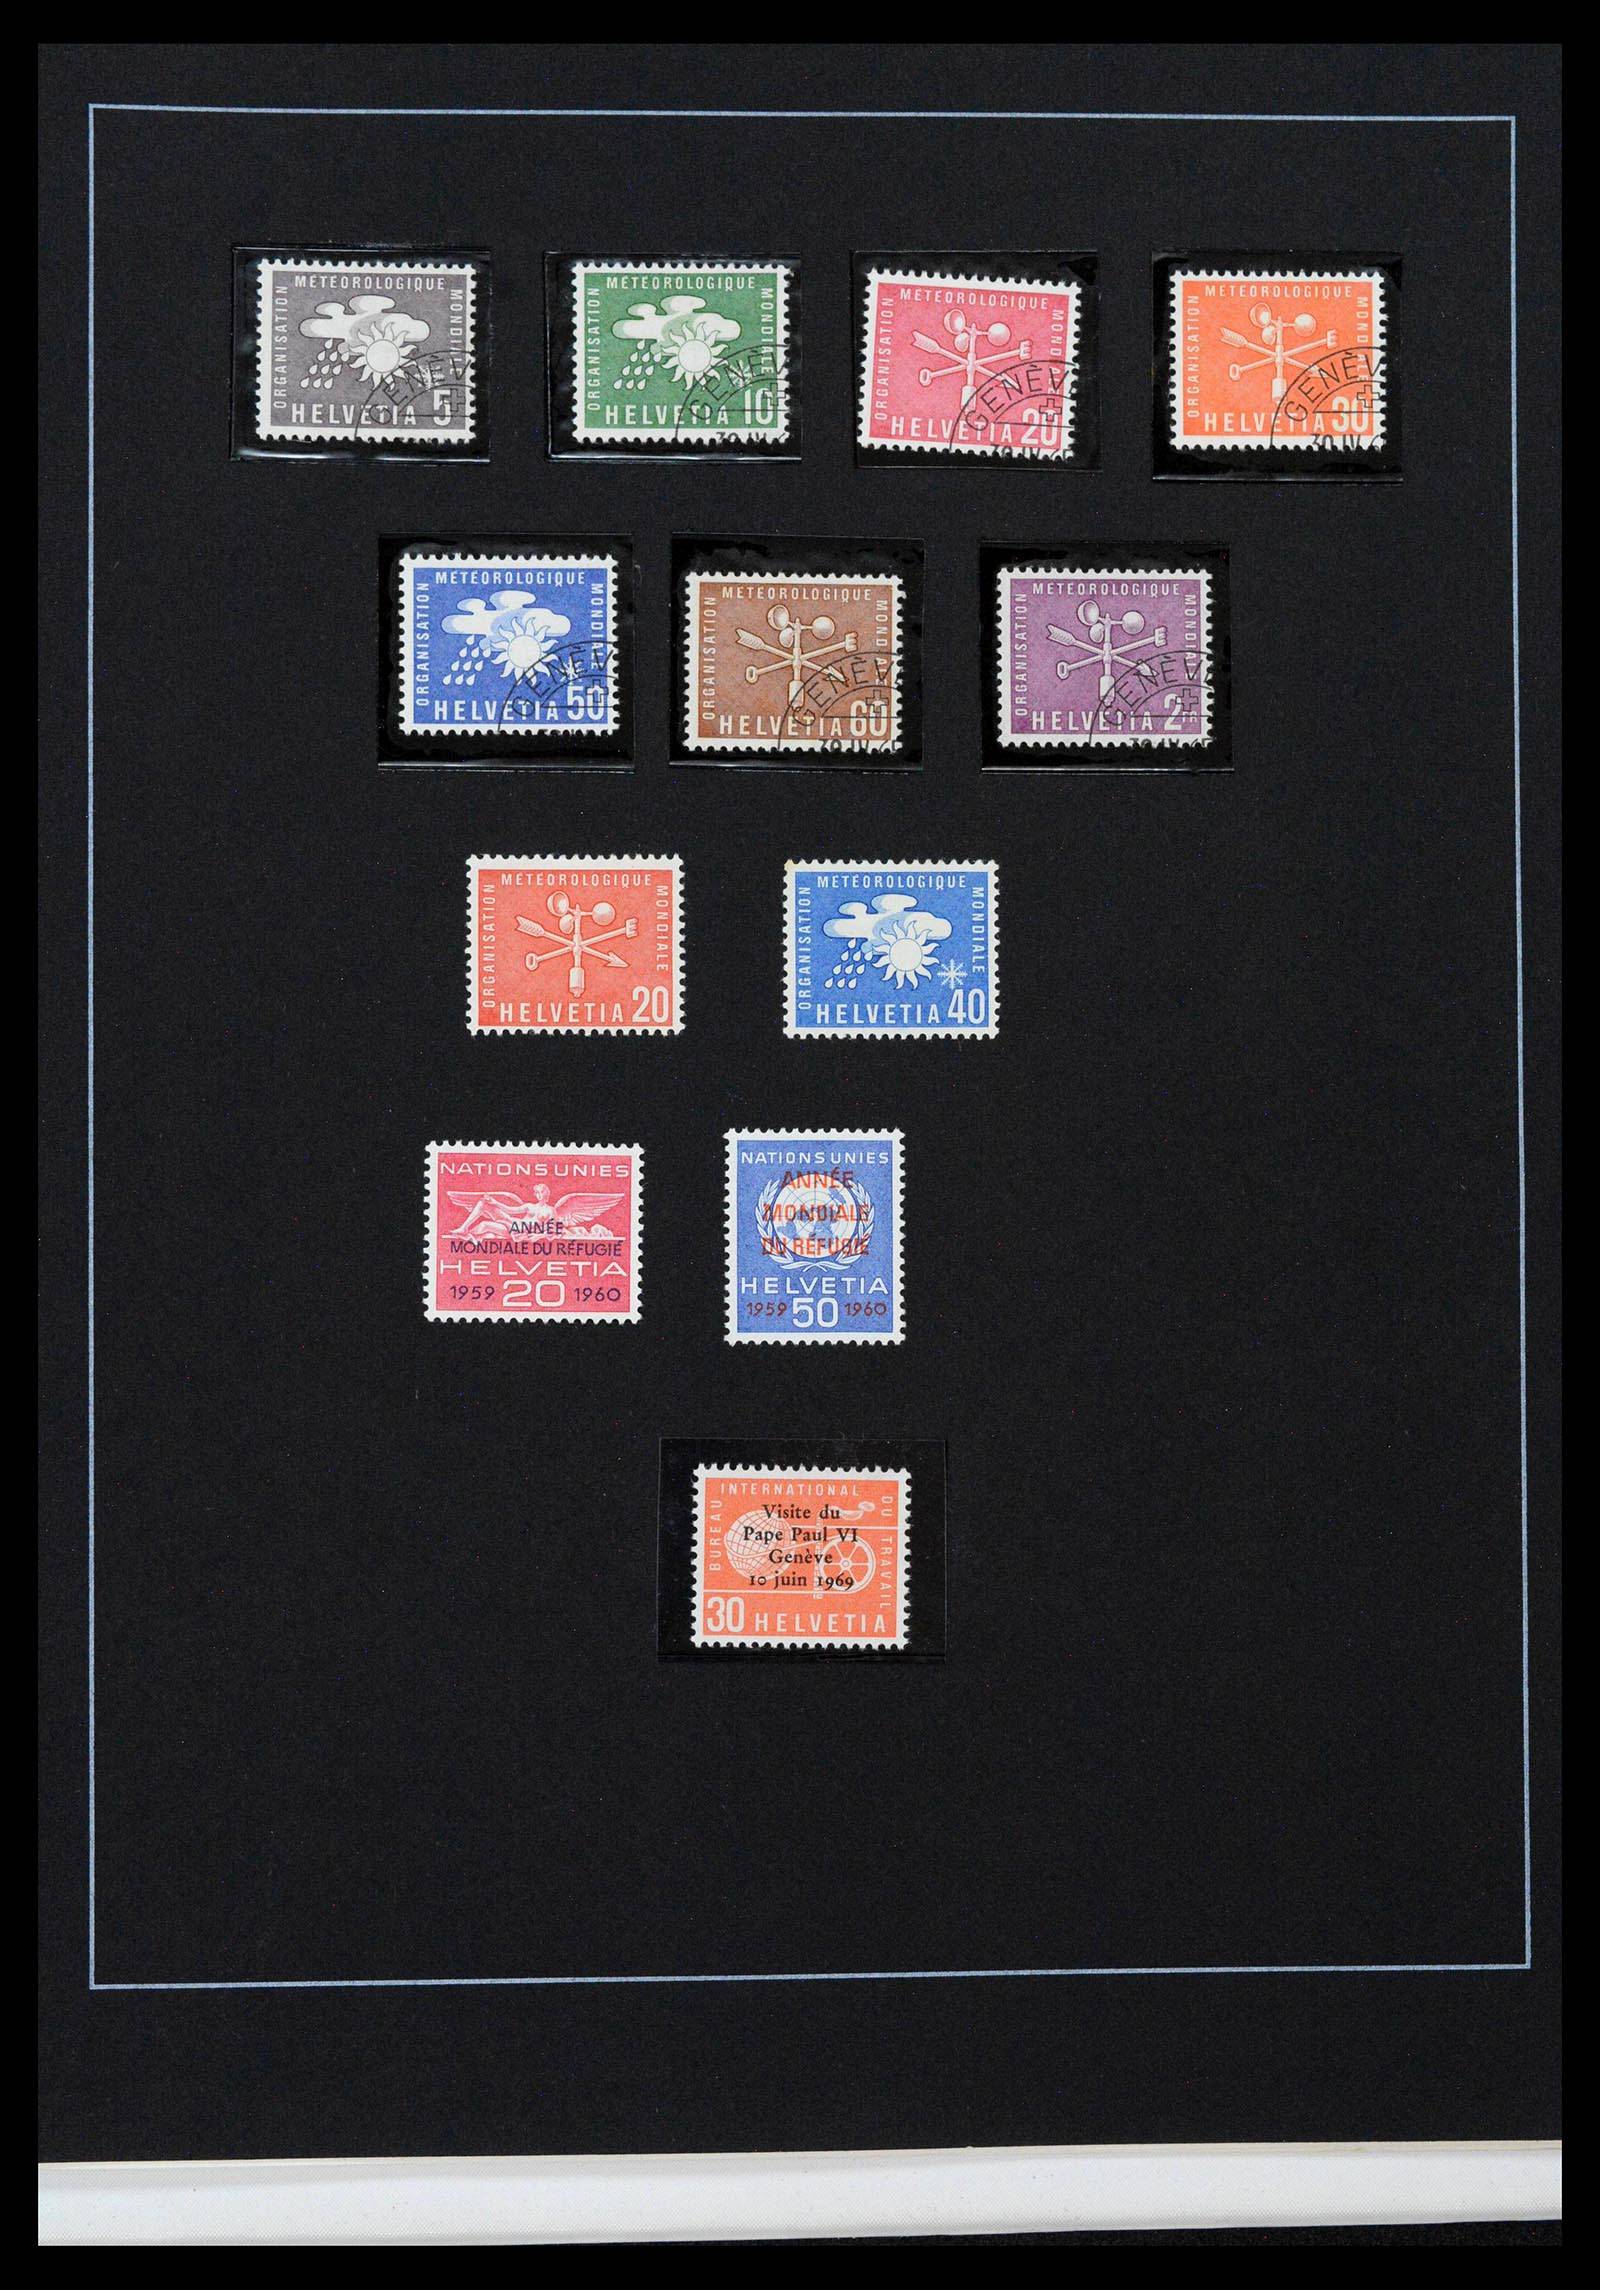 39235 0087 - Stamp collection 39235 Switzerland 1843-1960.